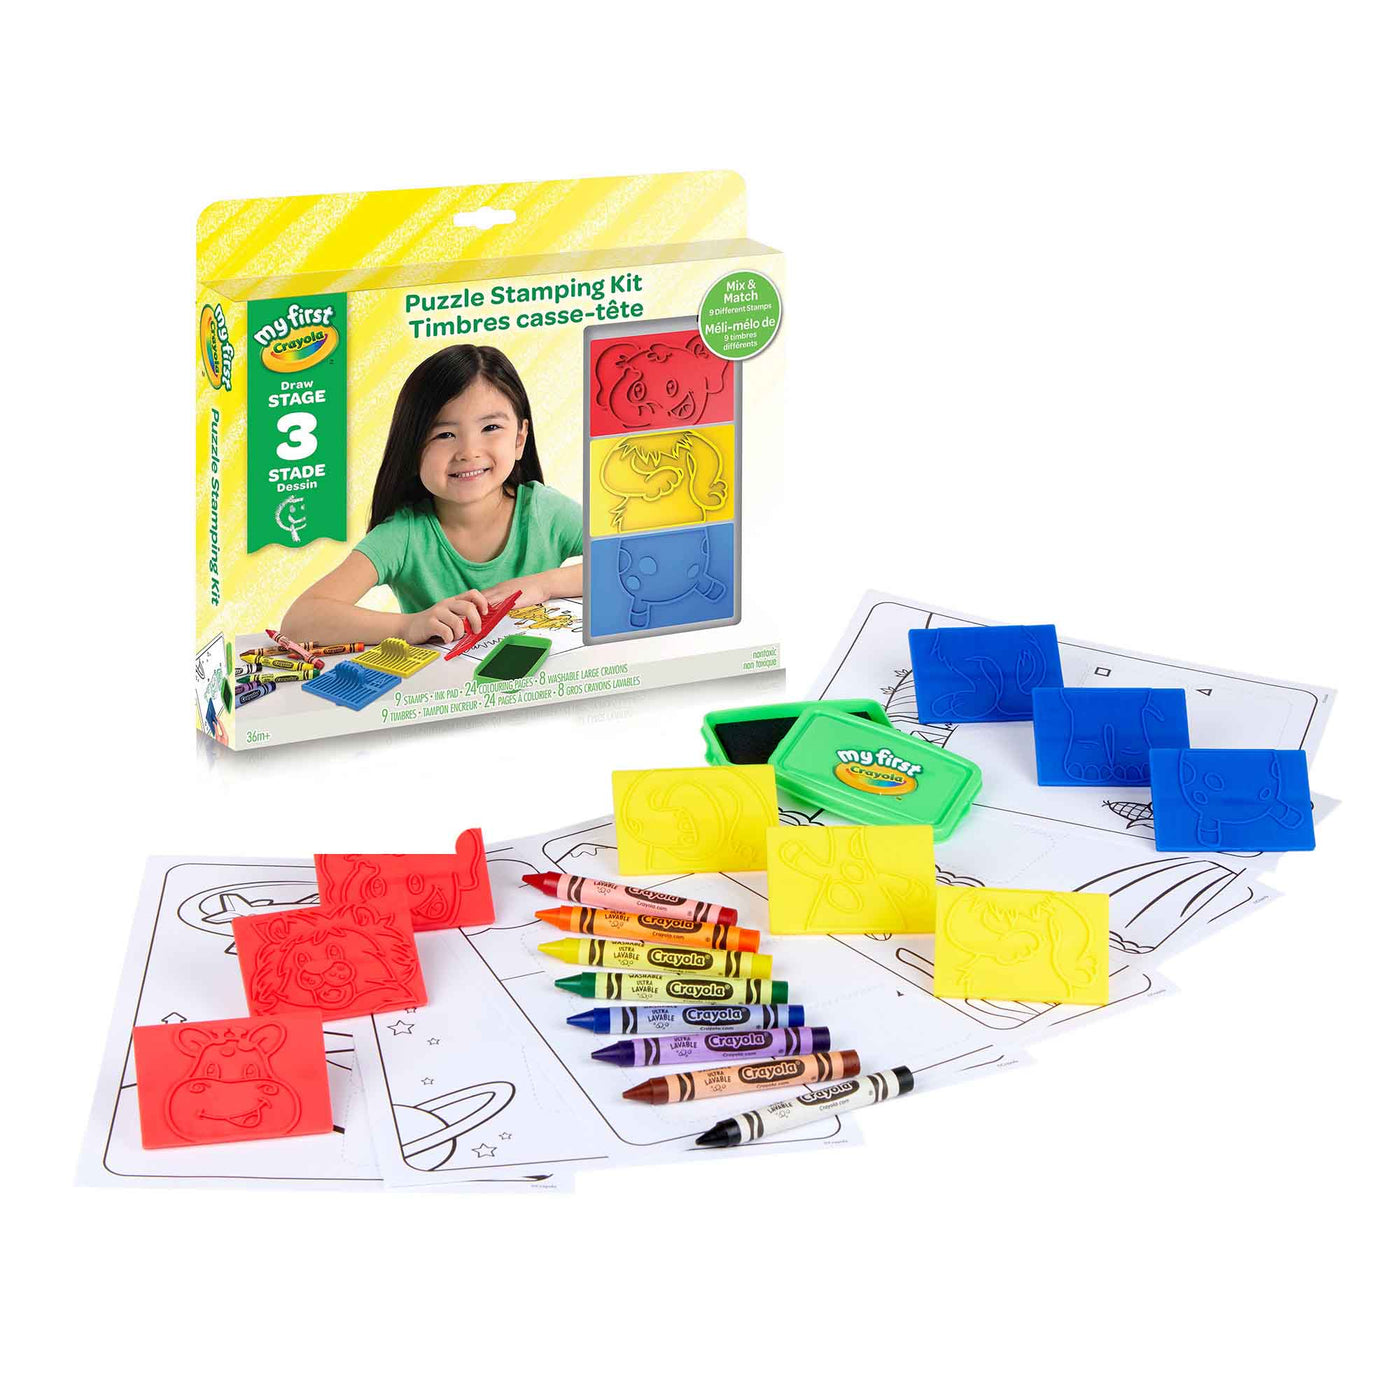 My First Crayola Puzzle Stamping Kit | Crayola